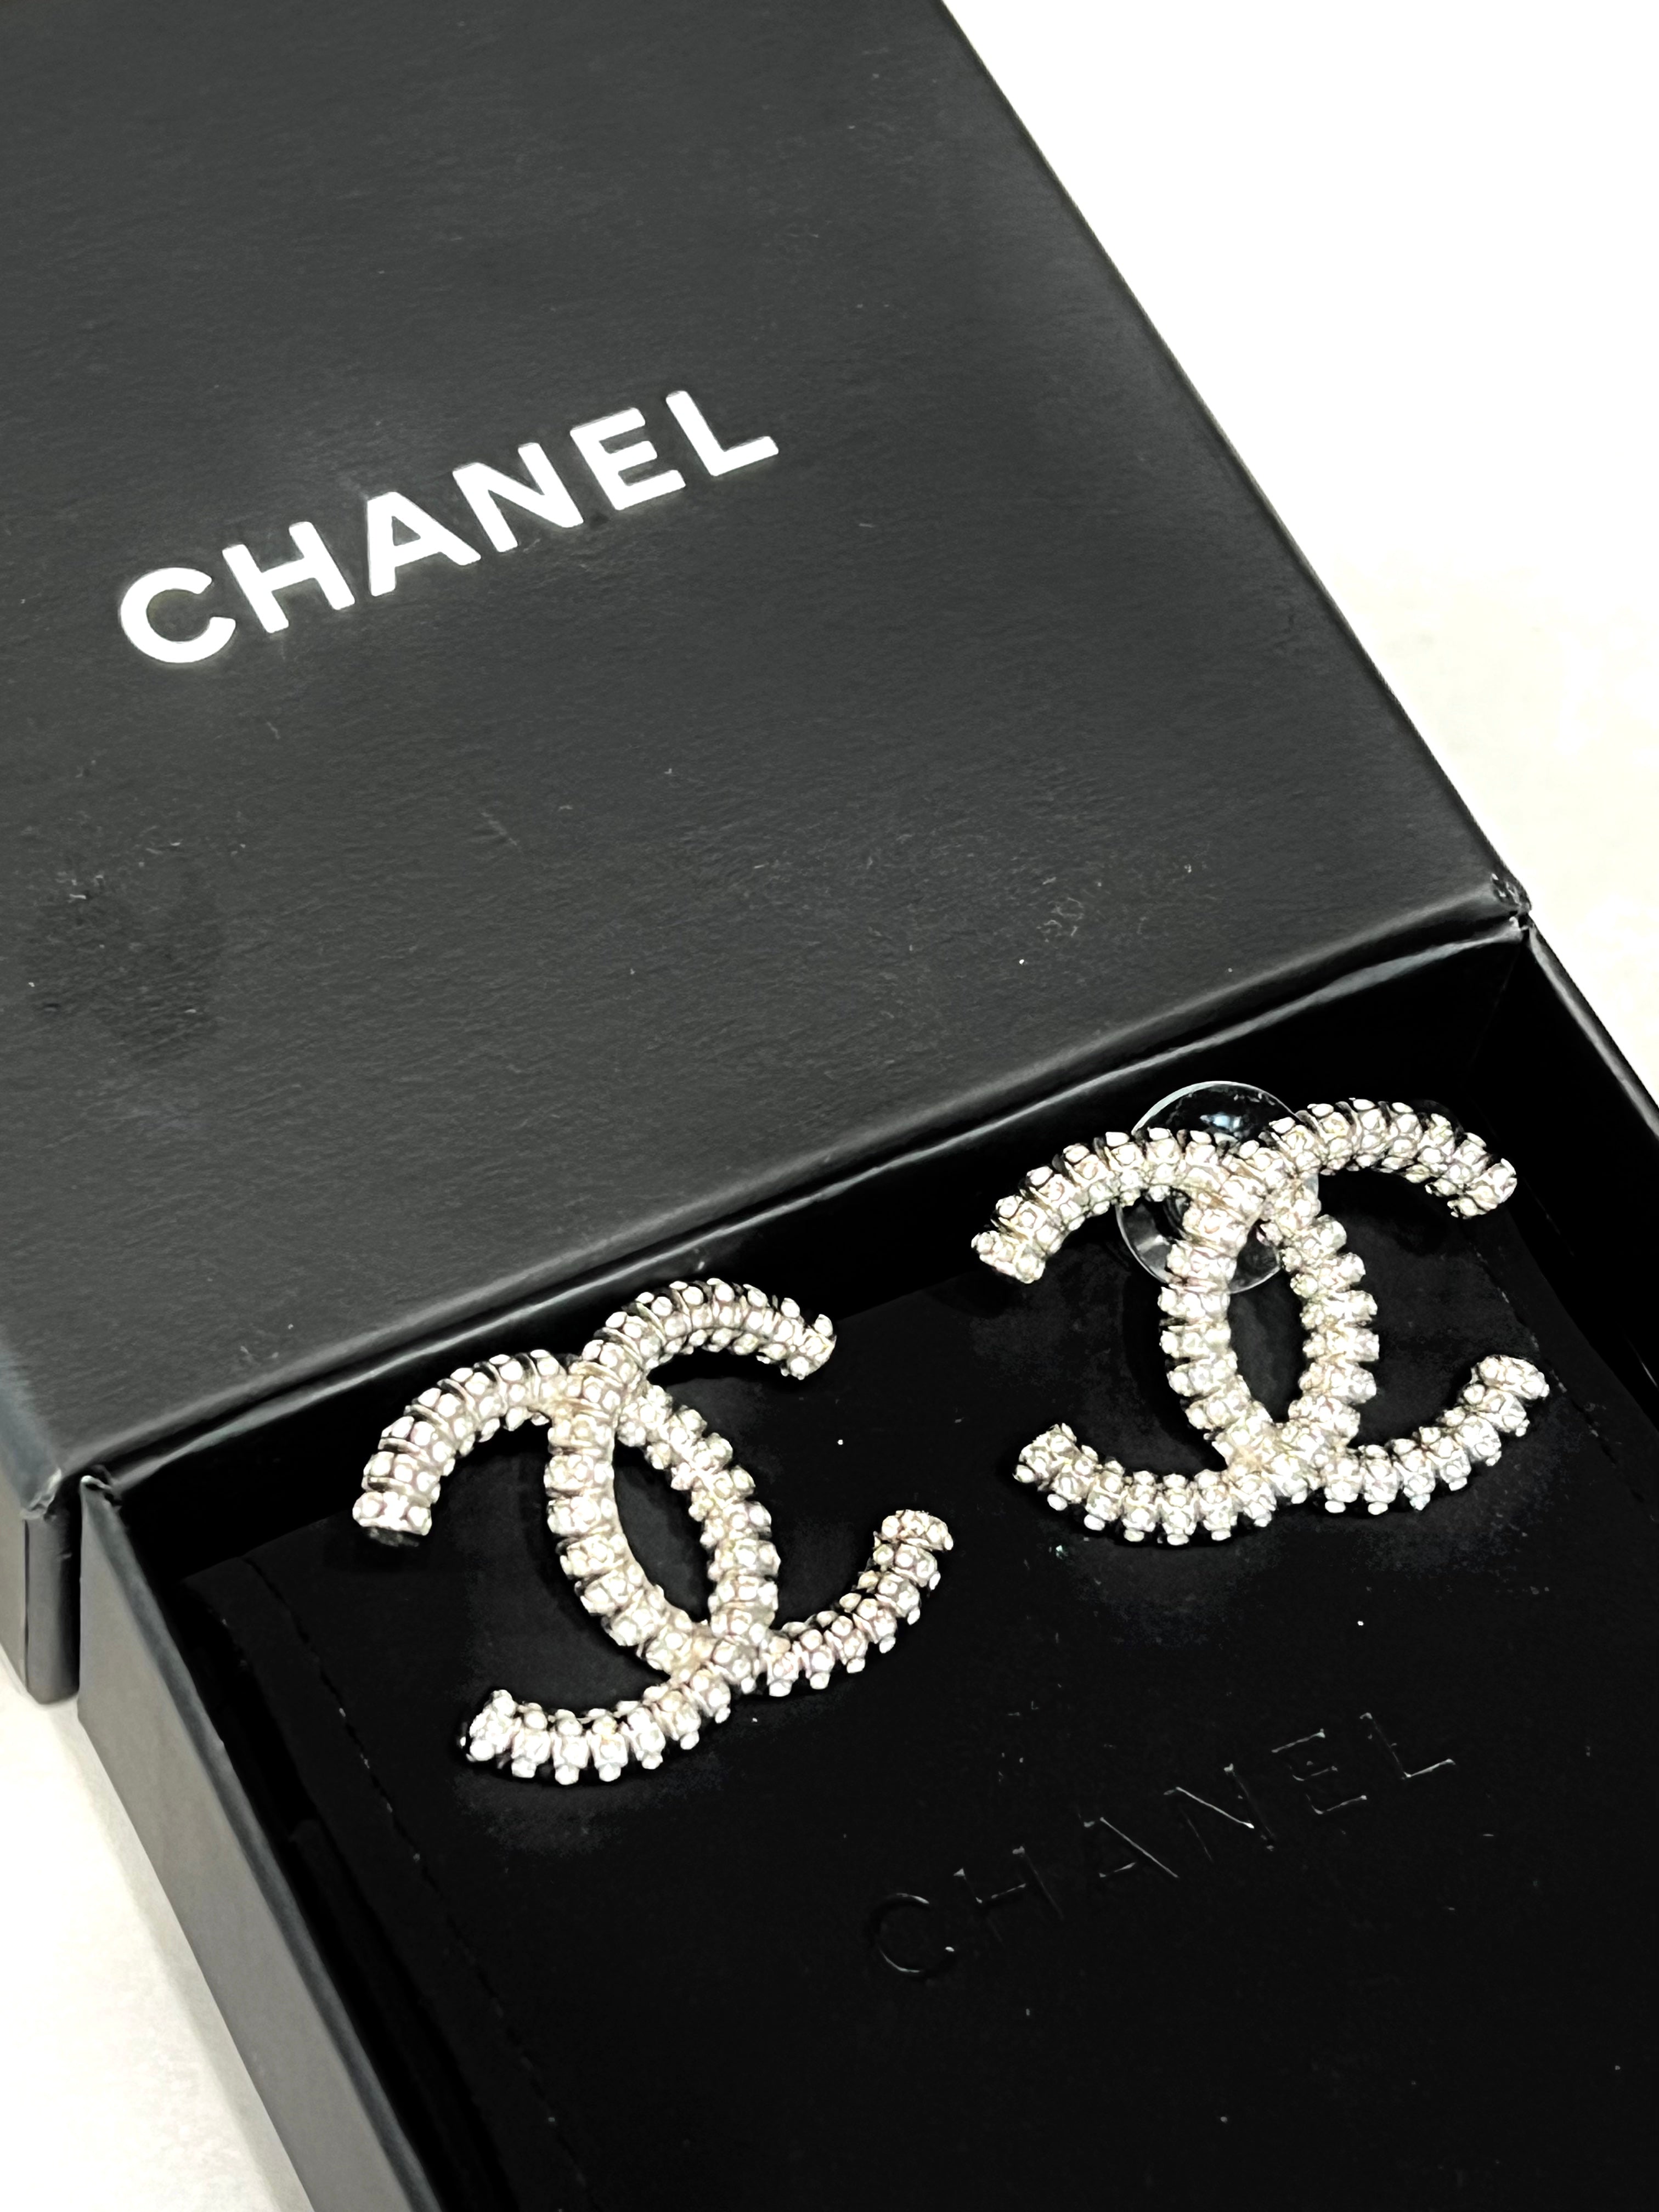 Chanel Interlocking CC Gold-Tone & Crystal Studded Dangle Earrings